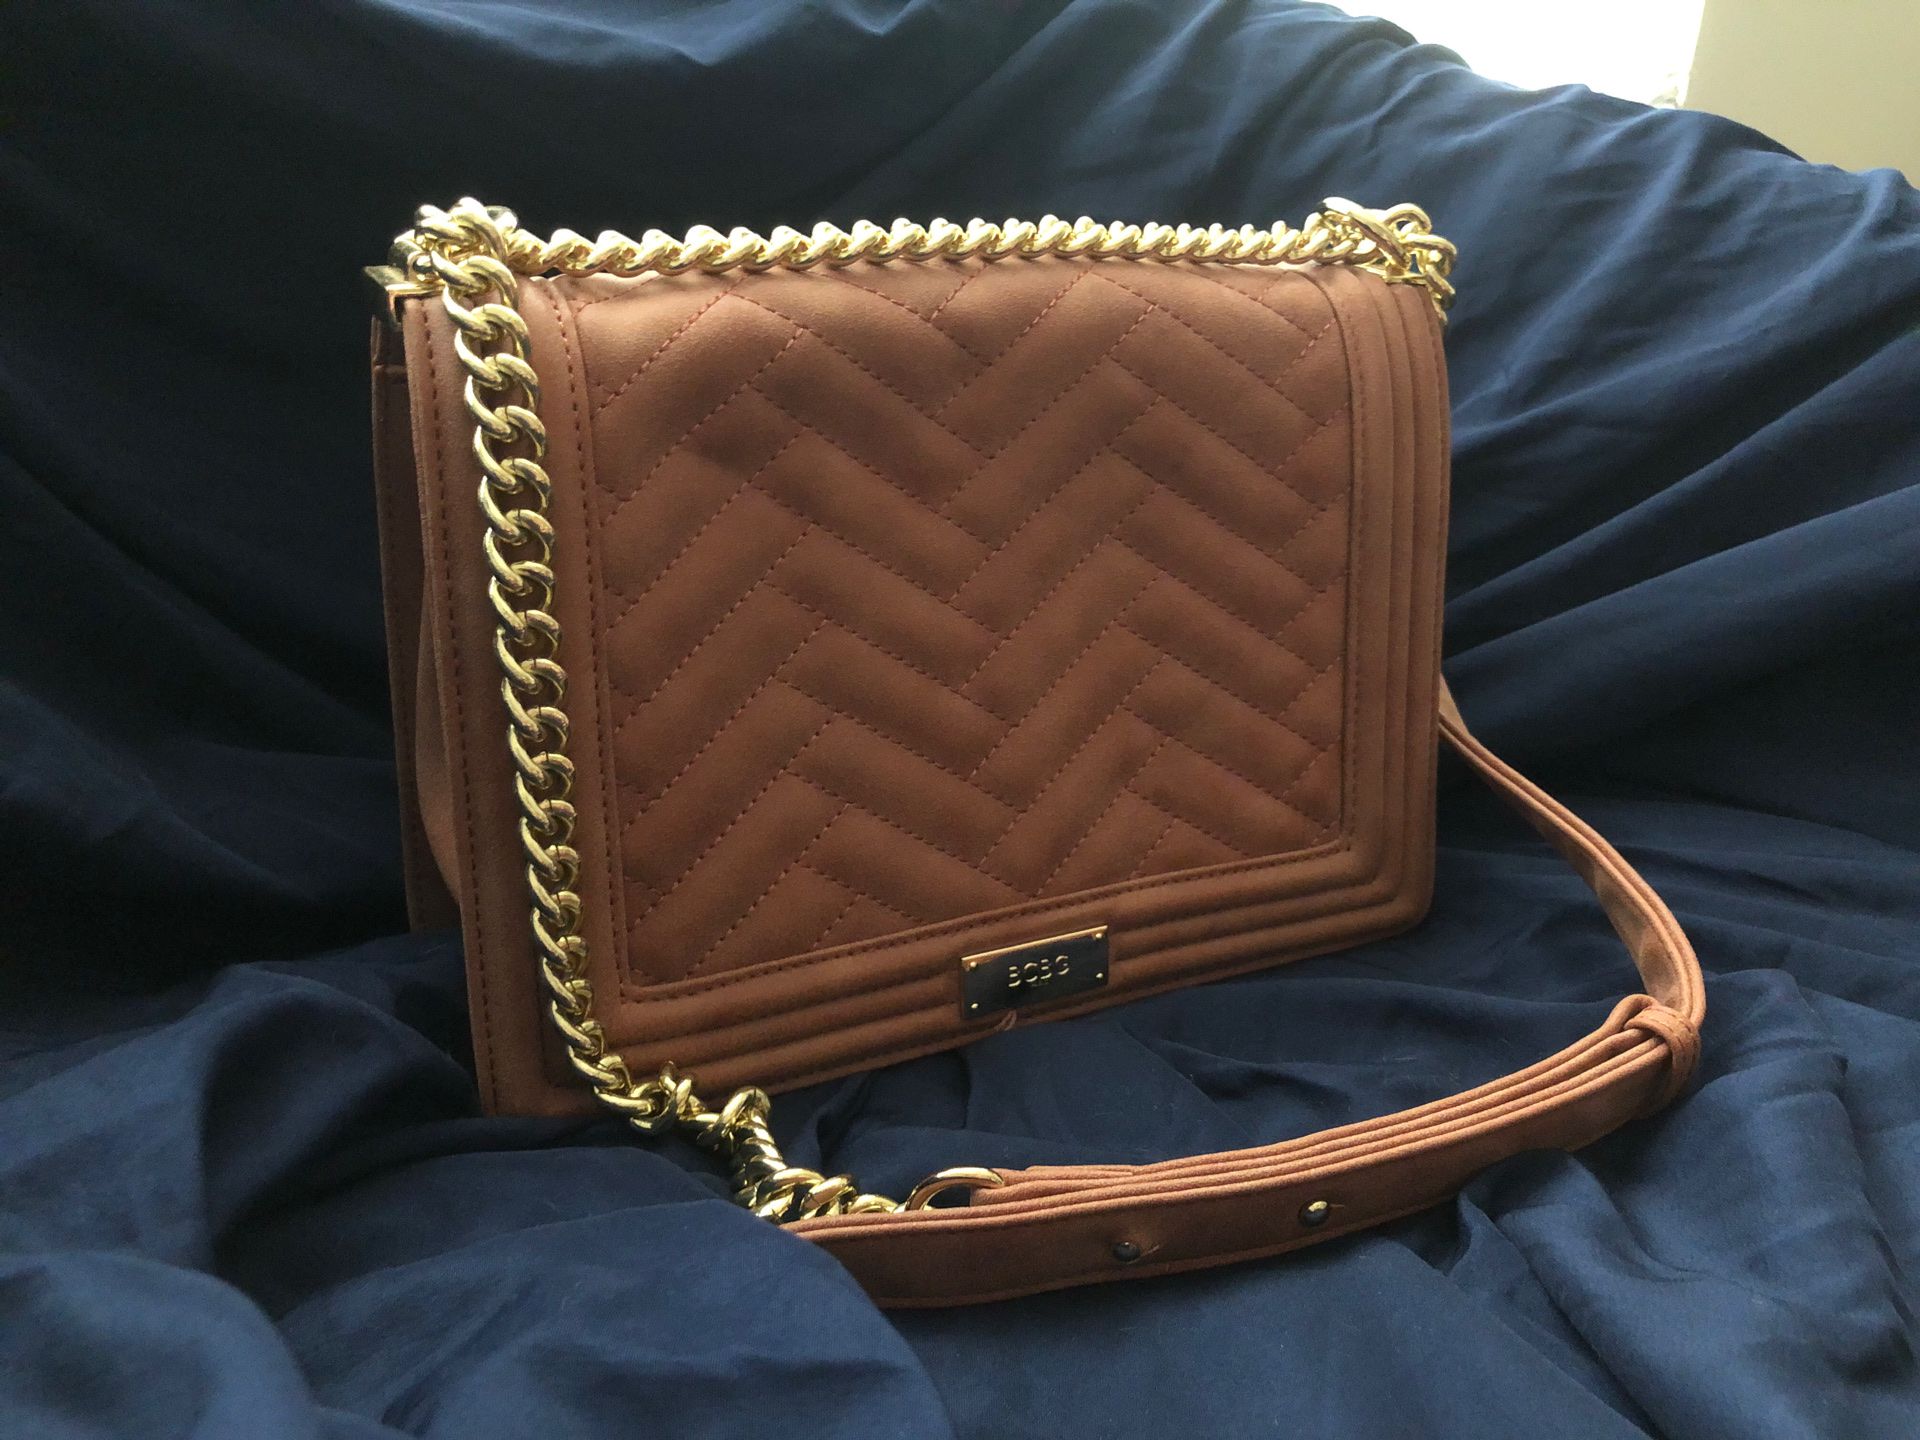 BCBG Paris Quilted purse